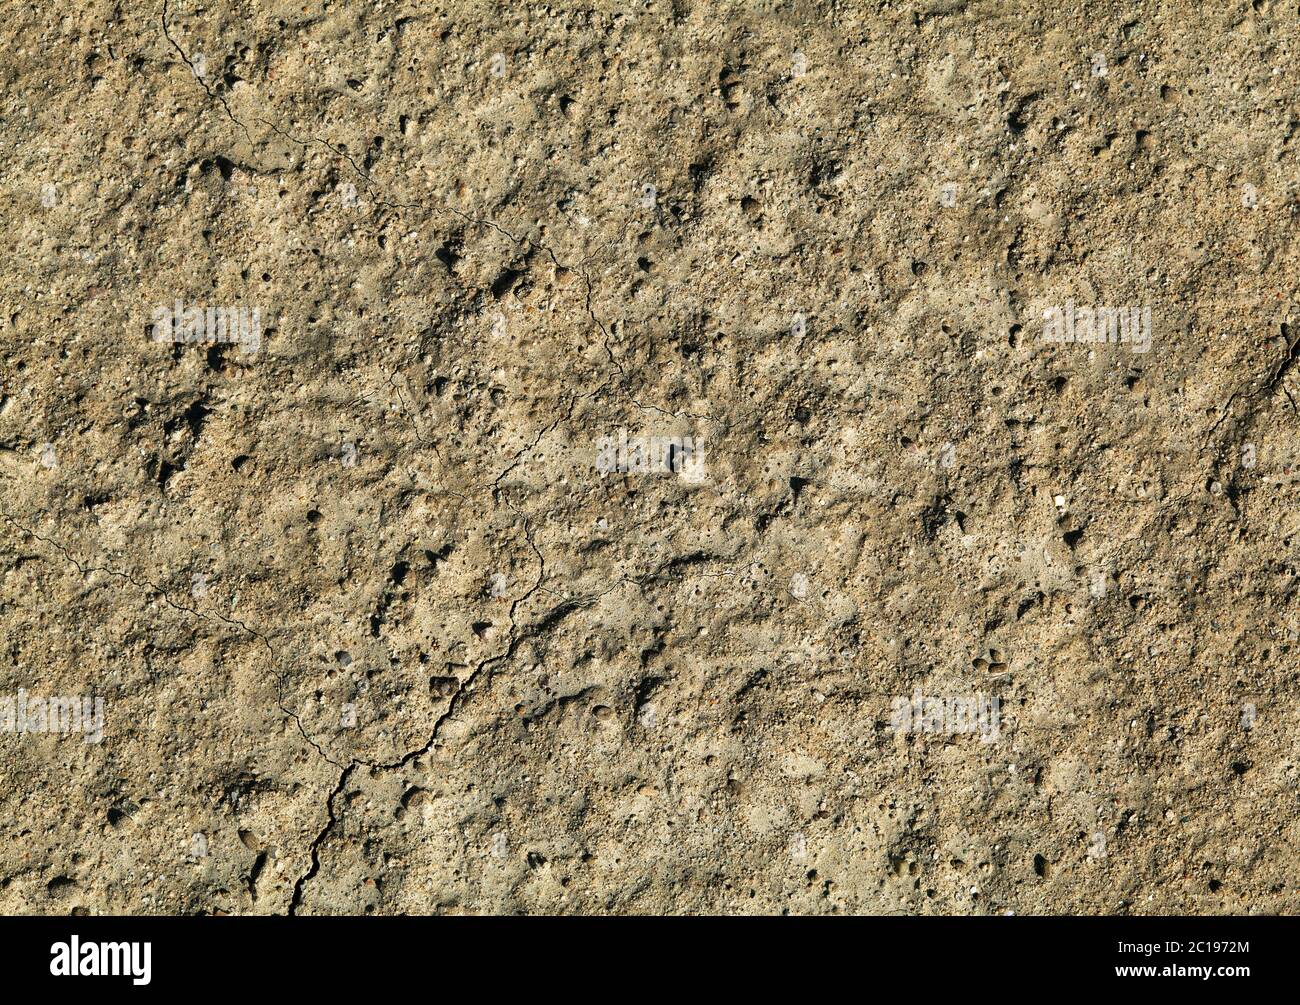 Dry clay texture Stock Photo